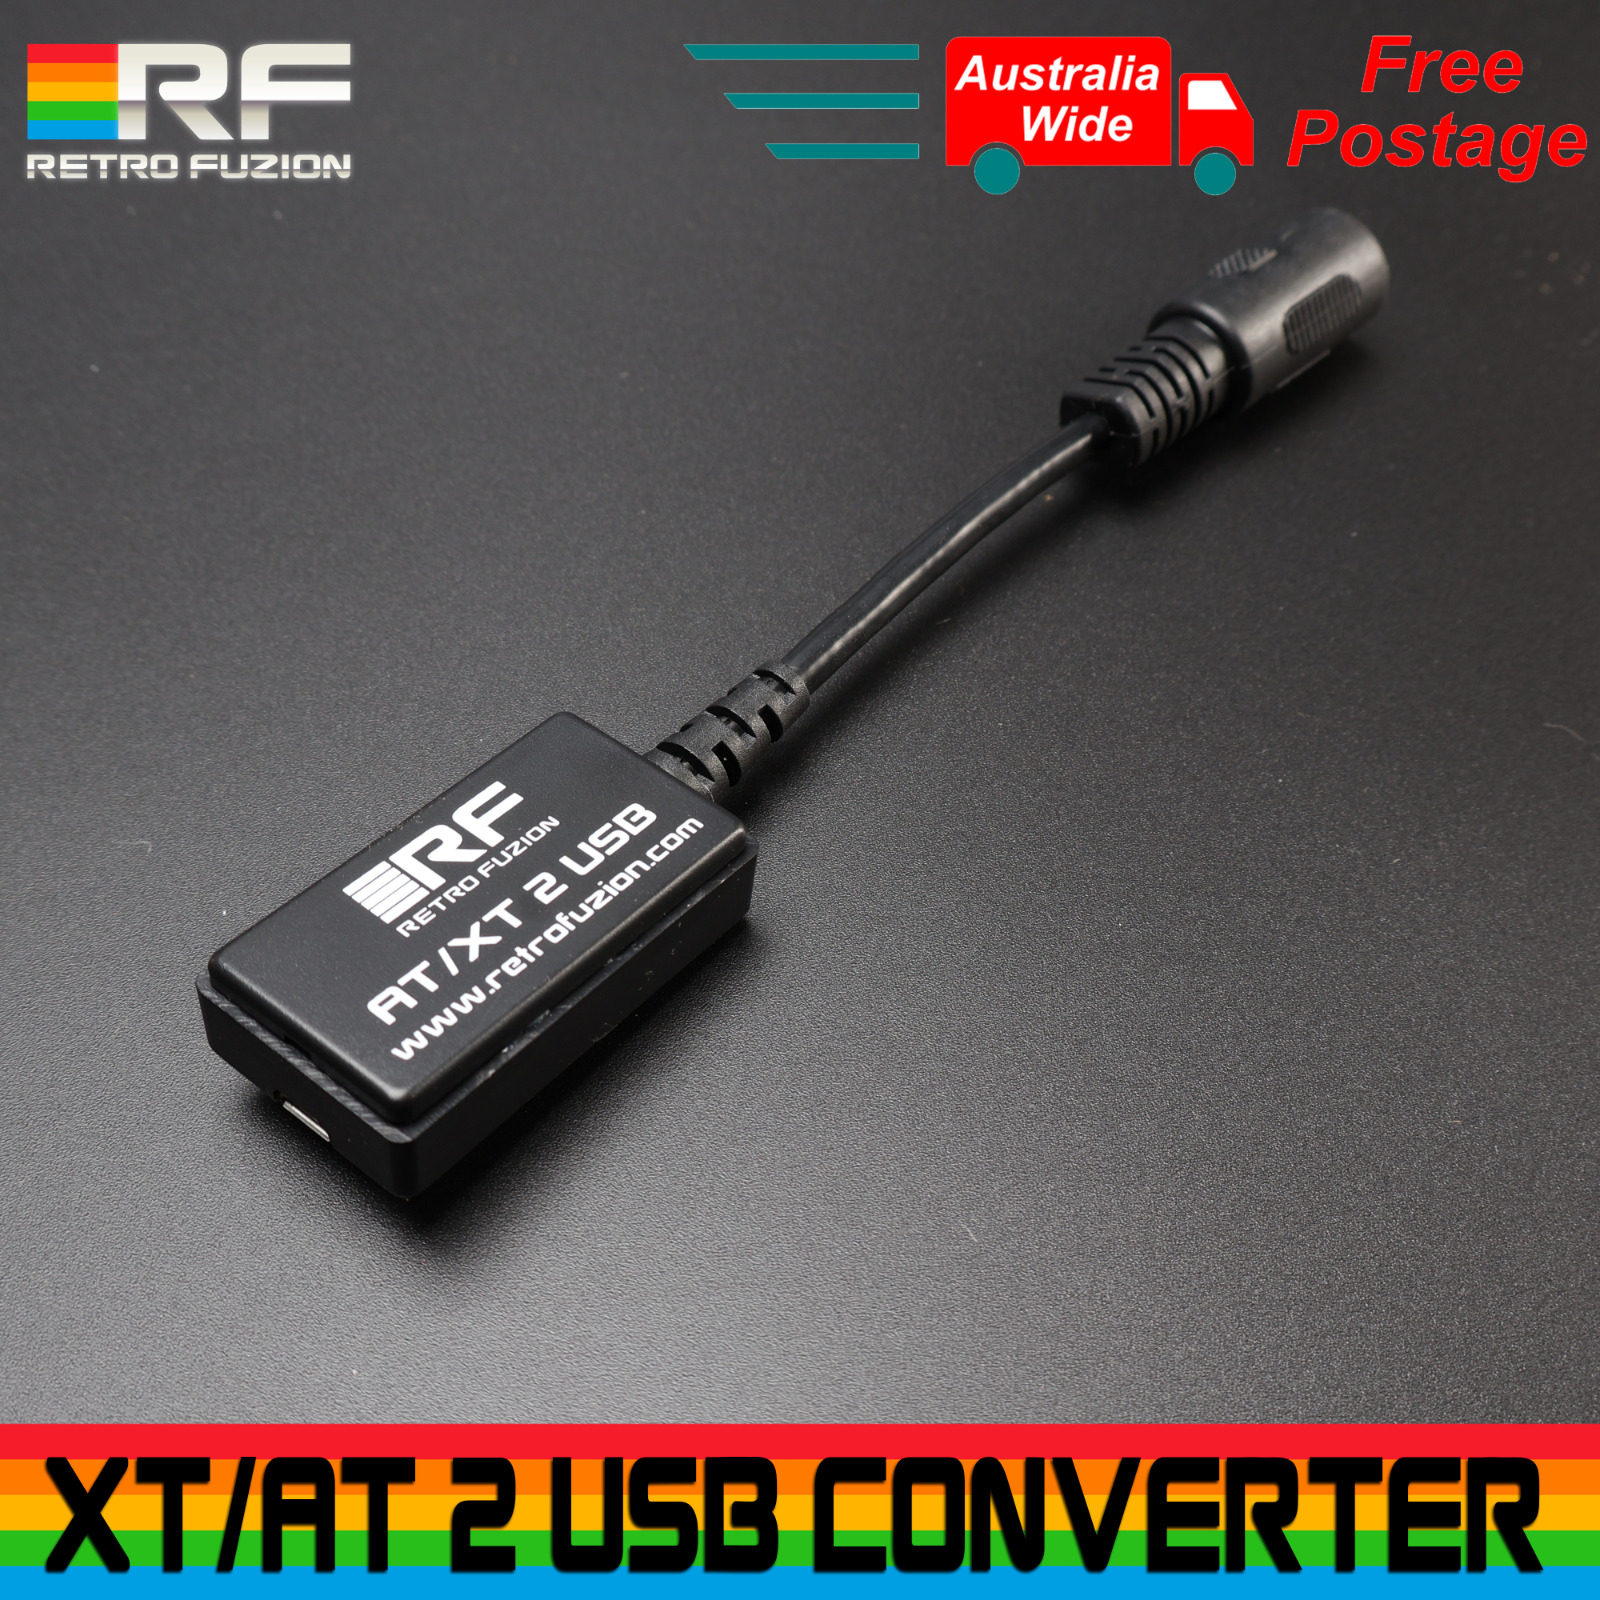 Retro Fuzion XT/AT 2 USB Keyboard adapter - Soarers Converter - 